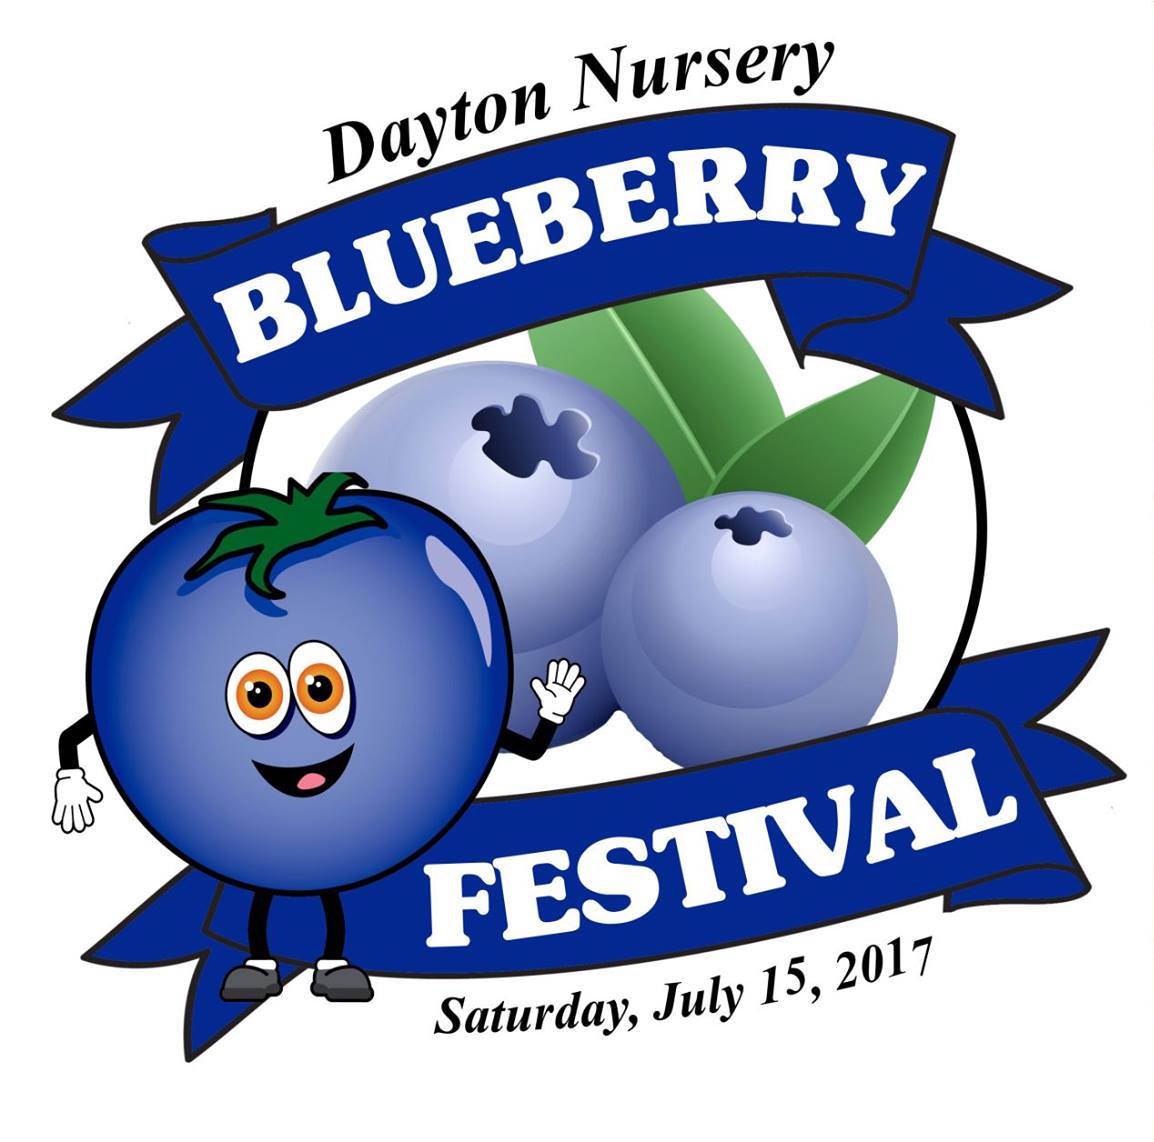 Blueberry Festival, Dayton Nursery at Dayton Nursery, Norton OH, Outdoors